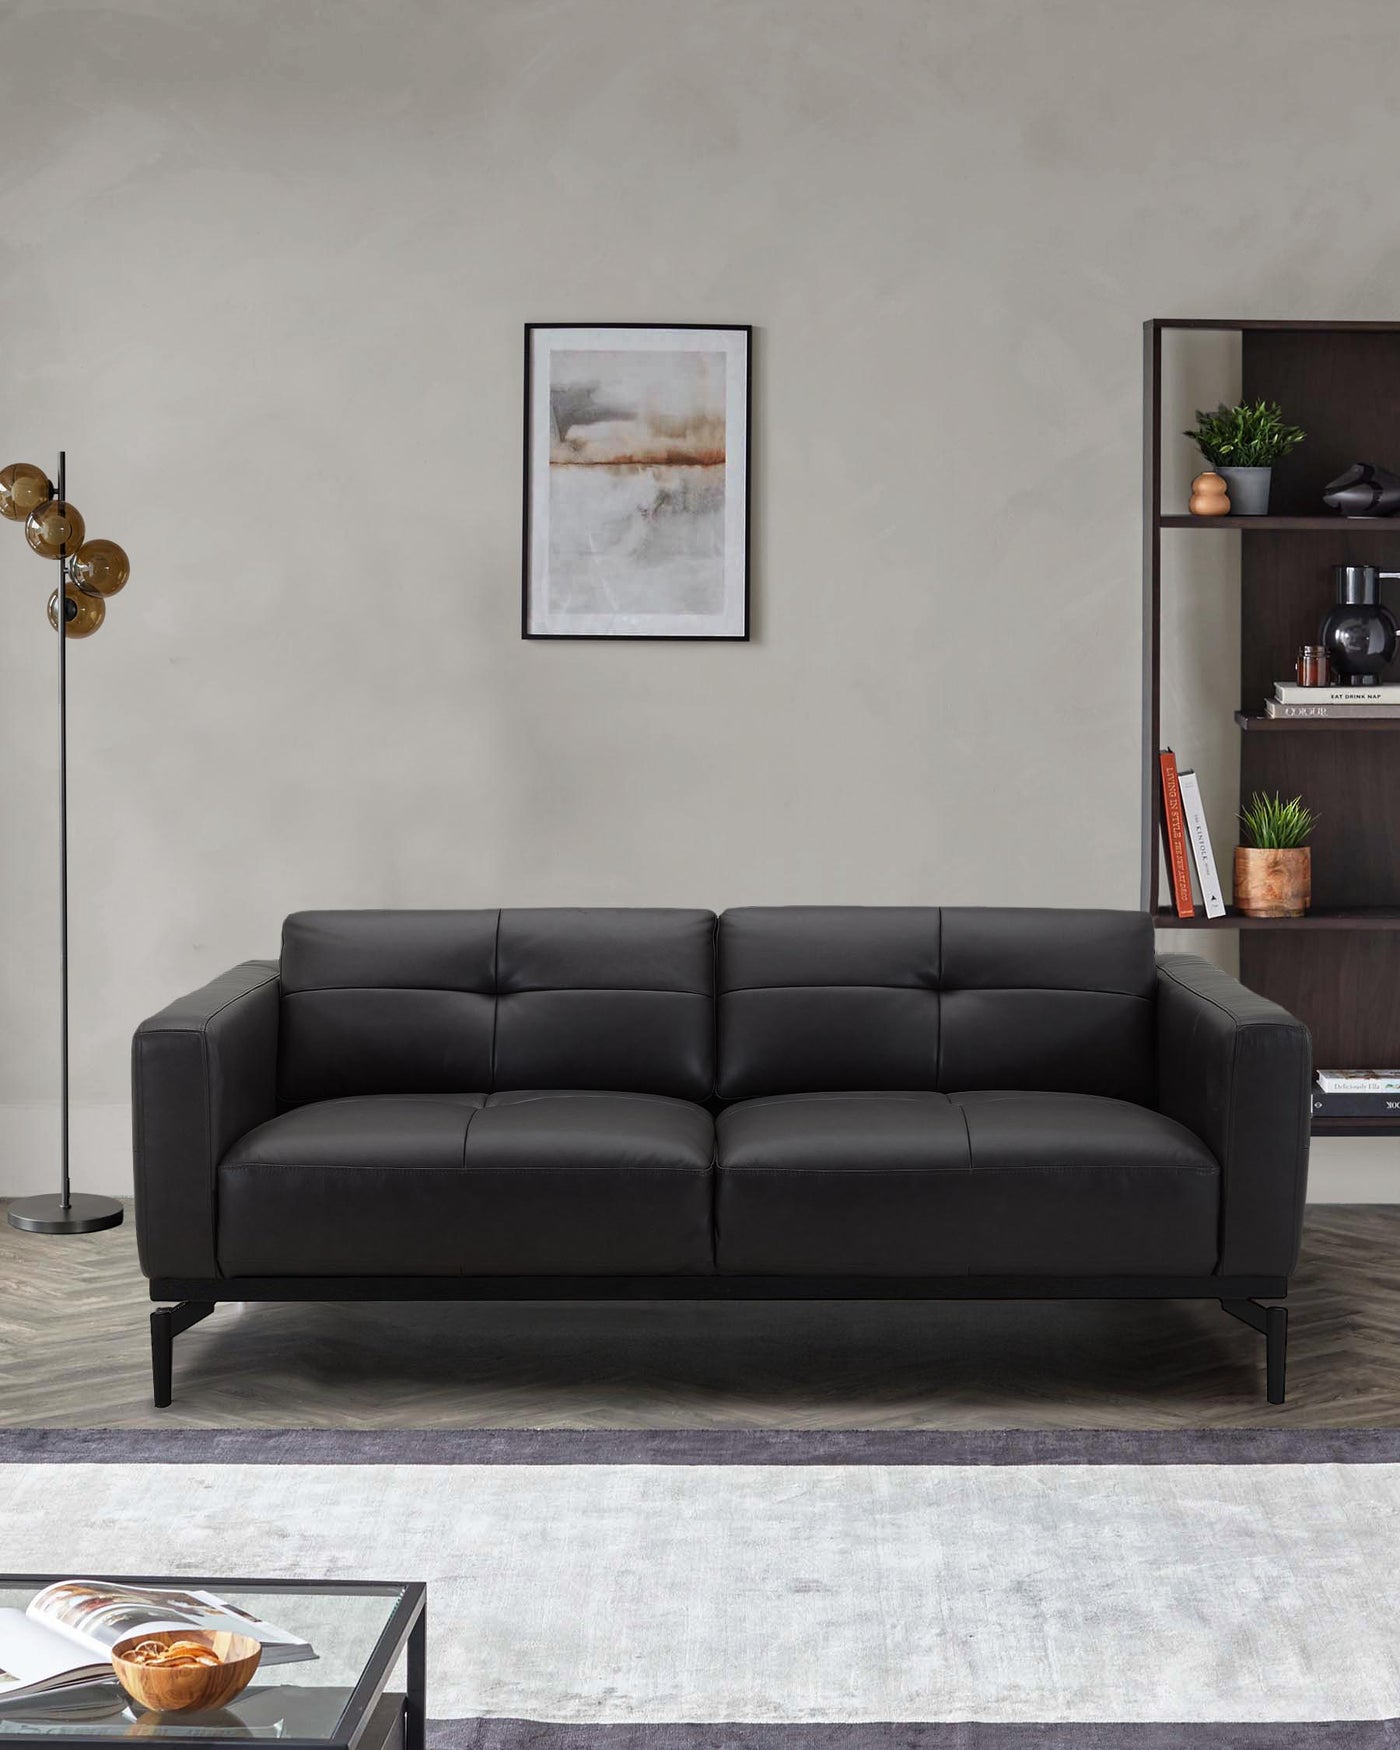 Colton black leather 2 seater sofa